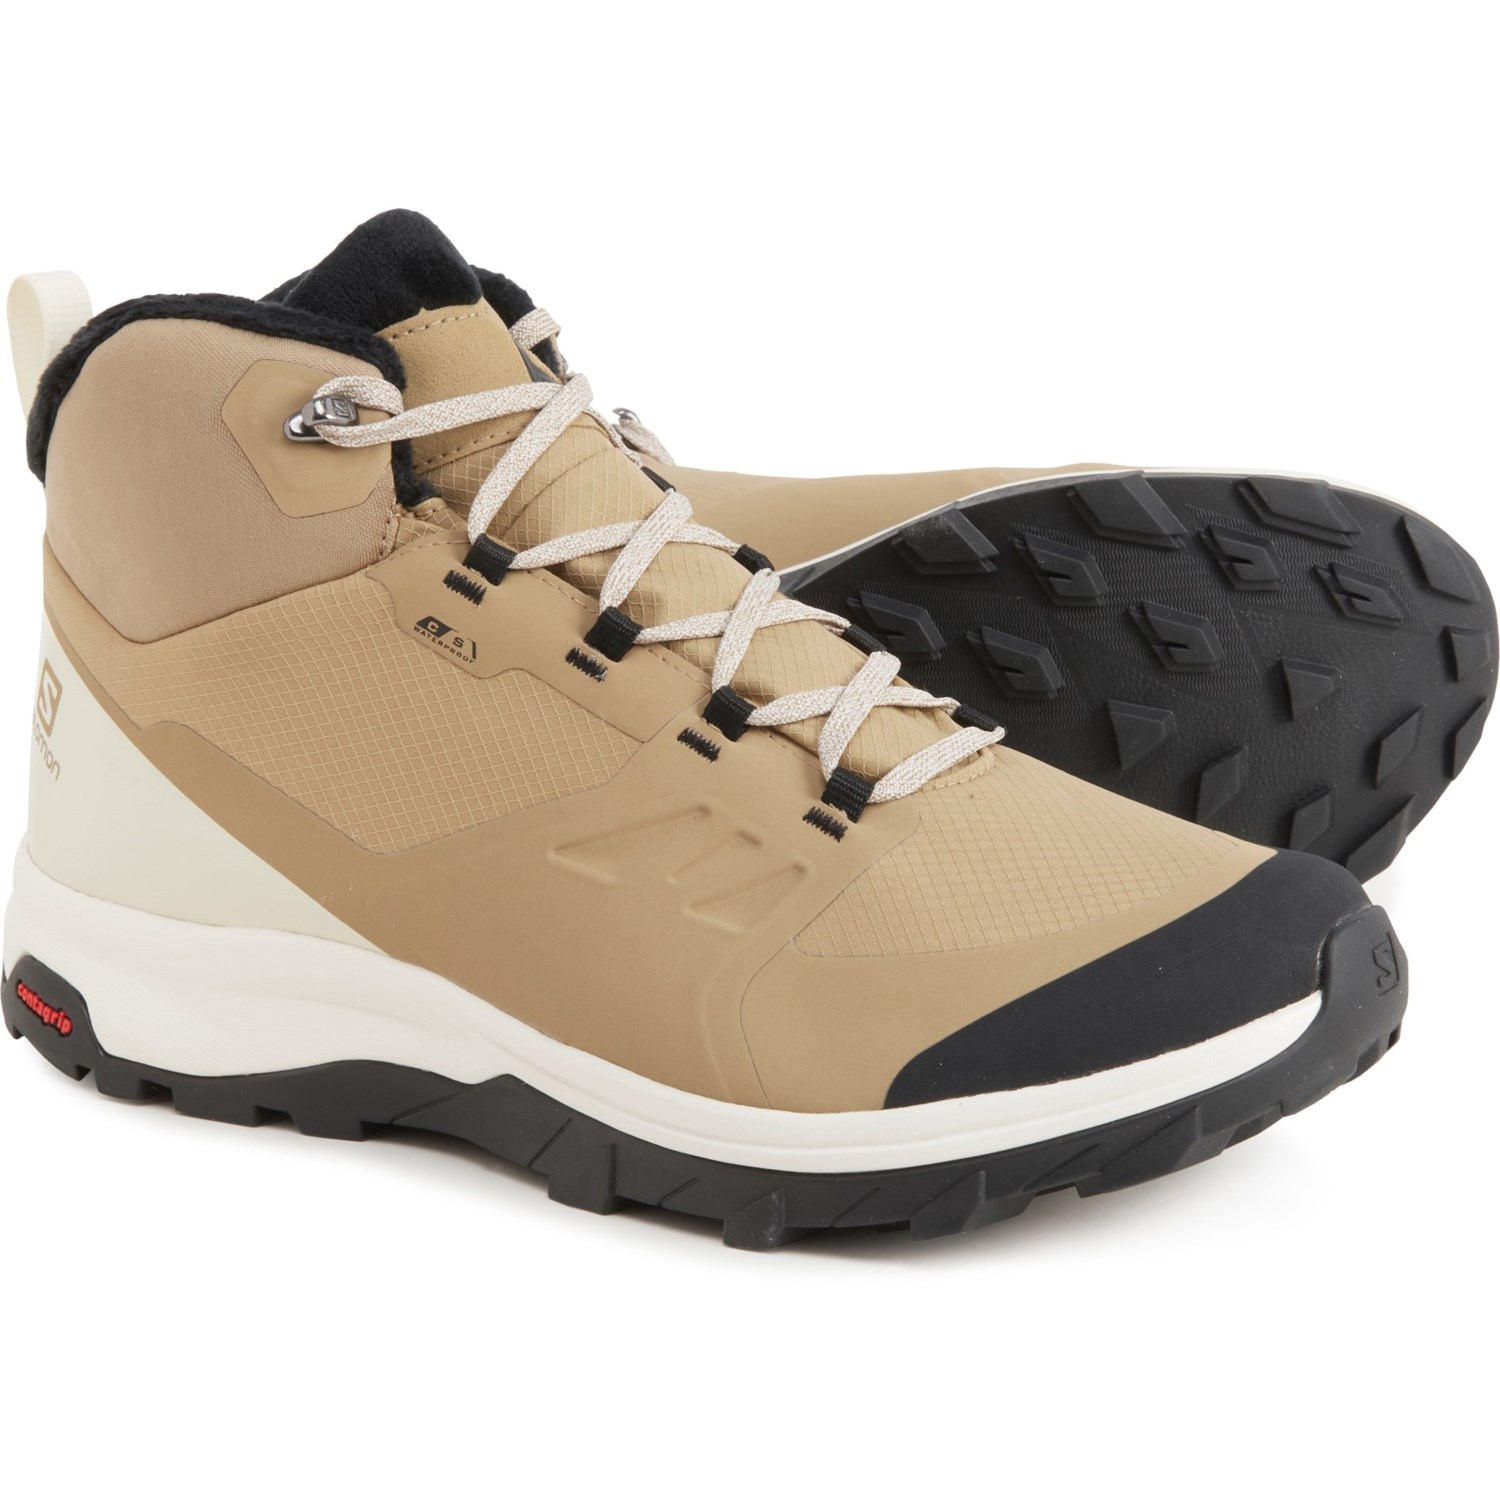 Salomon OUTsnap Climan Mid Snow Shoes (For Men) - Save 55%